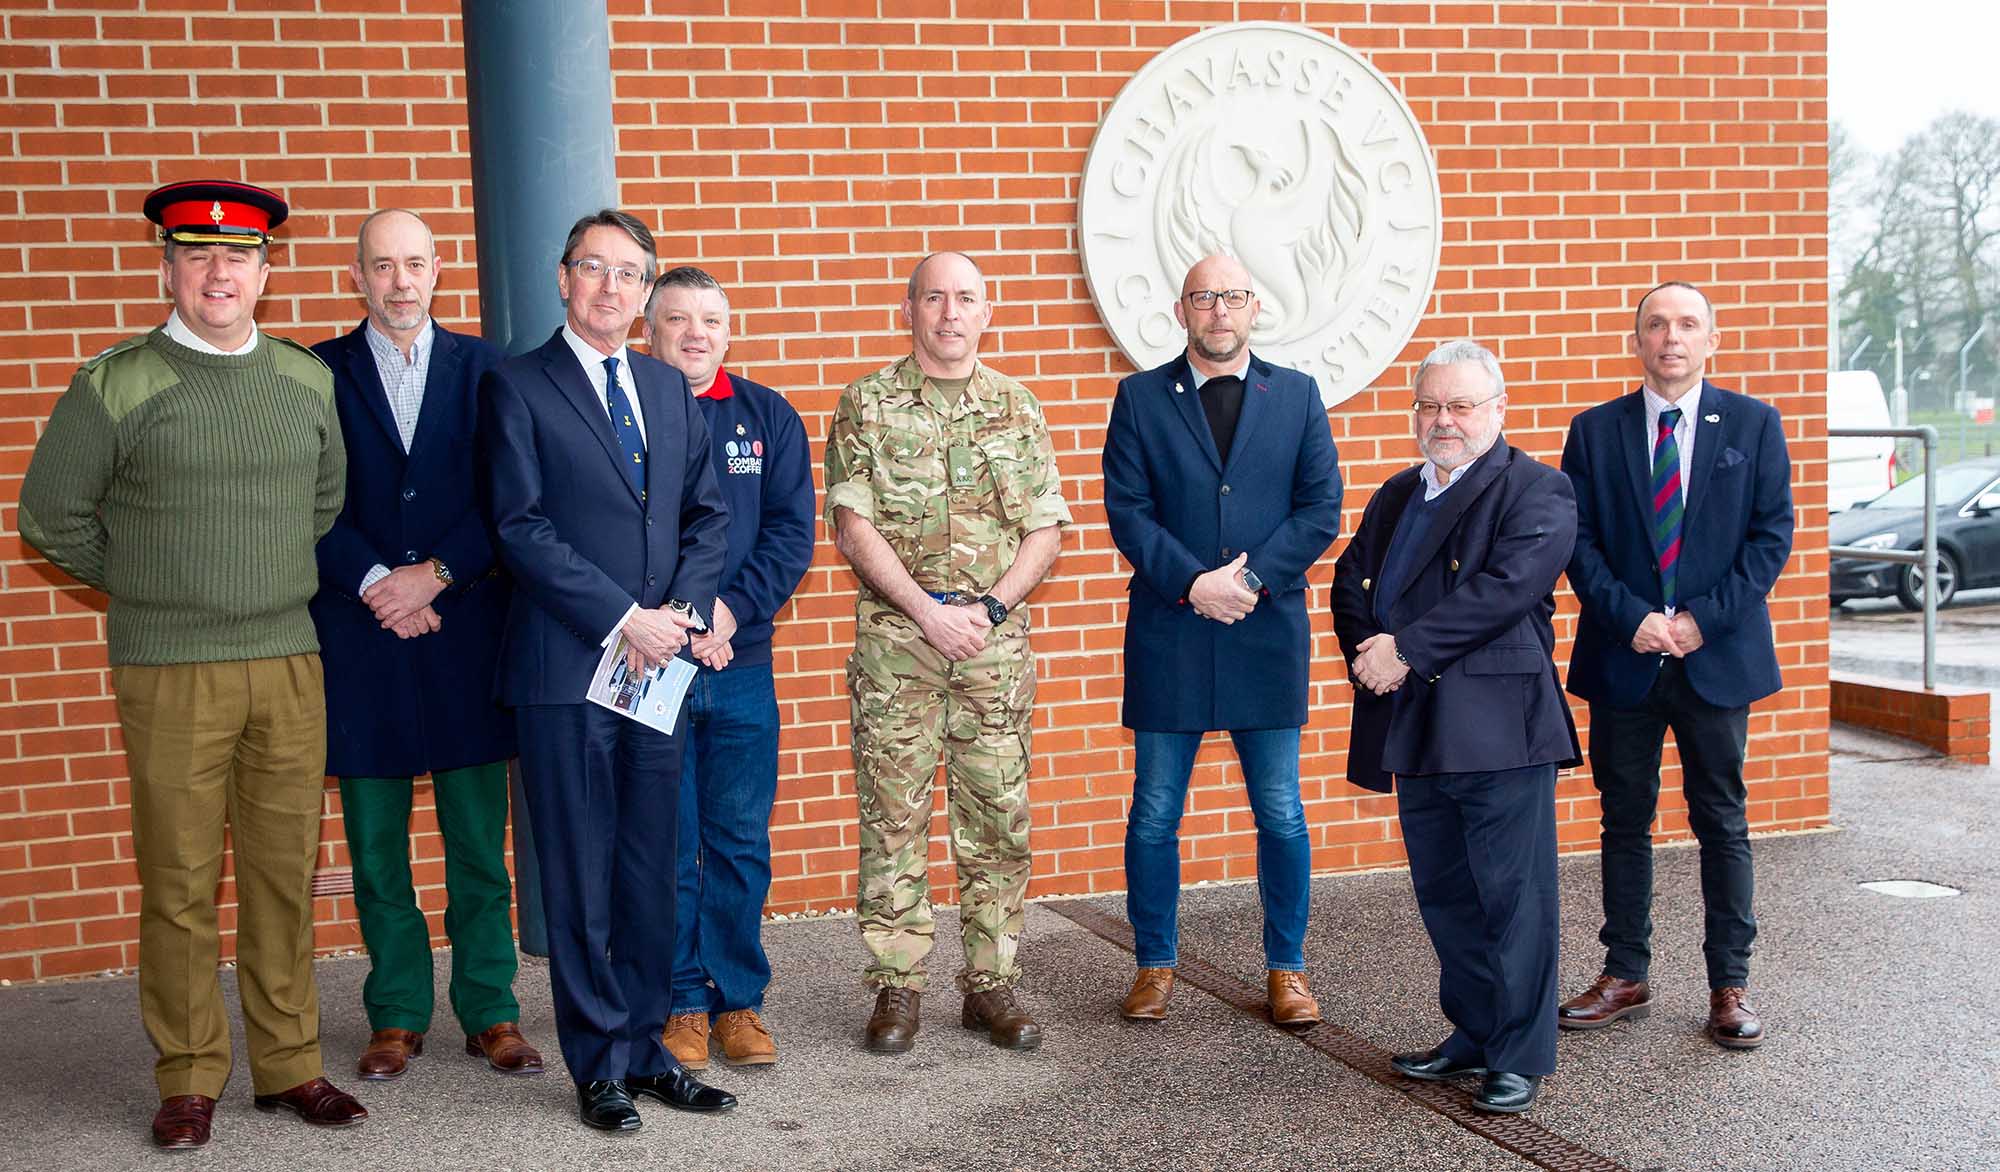 Outside the centre - L-R Lt Col. Ed Rankin, Steve Harris, Paul Tarrant, Nigel Seaman, Maj. Colin Peall, Dave Hawtin, Chris Hicks and Simon Ferrier